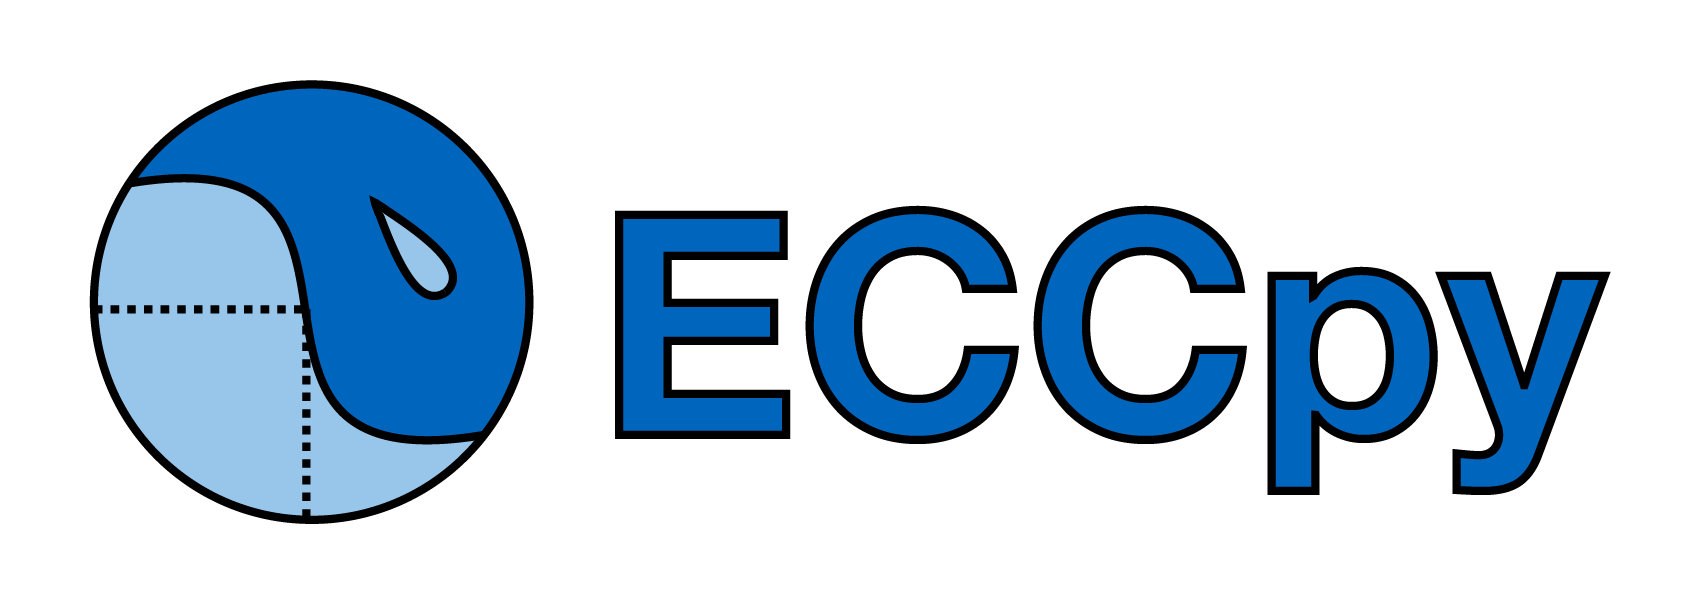 https://raw.githubusercontent.com/teese/eccpy/master/docs/logo/ECCpy_logo.png